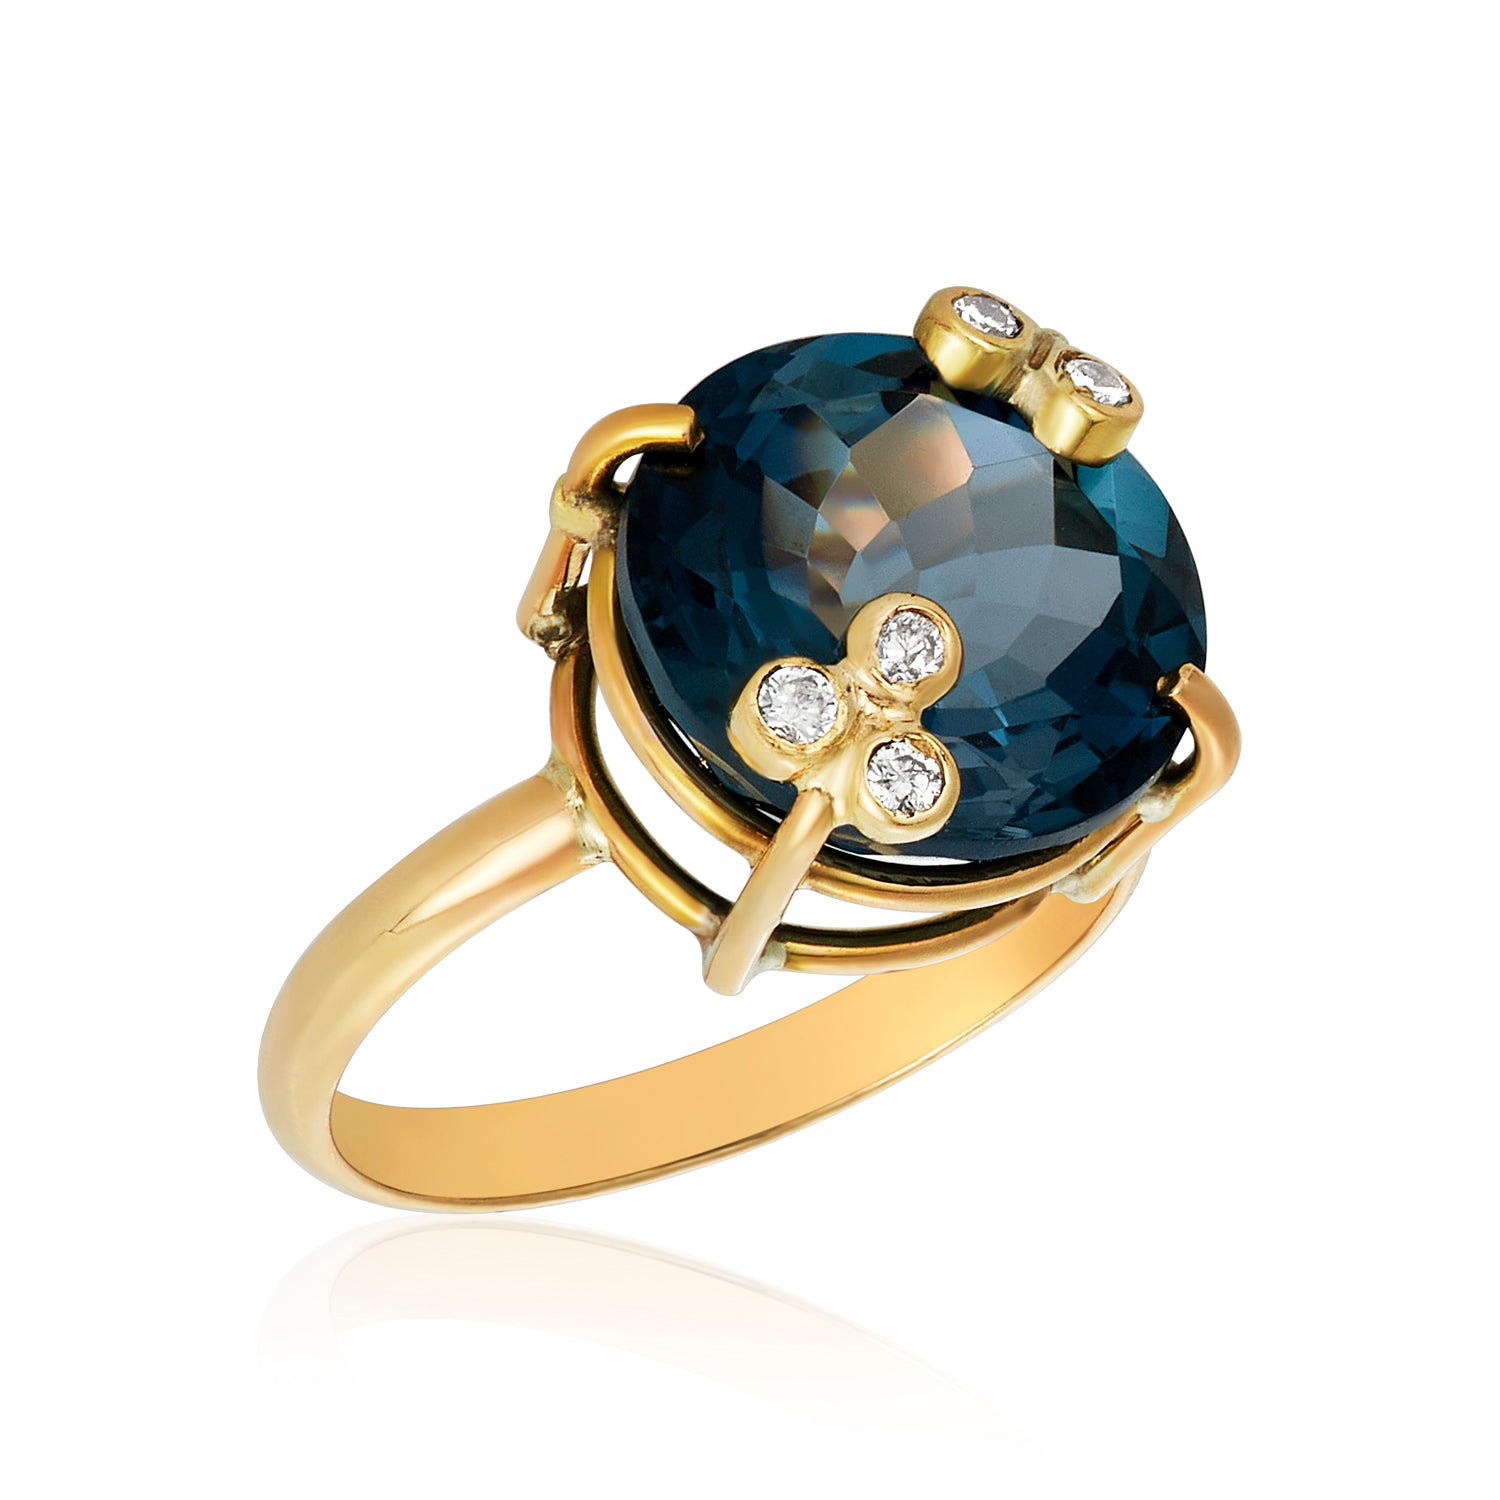 Cynthia London Blue Topaz Ring